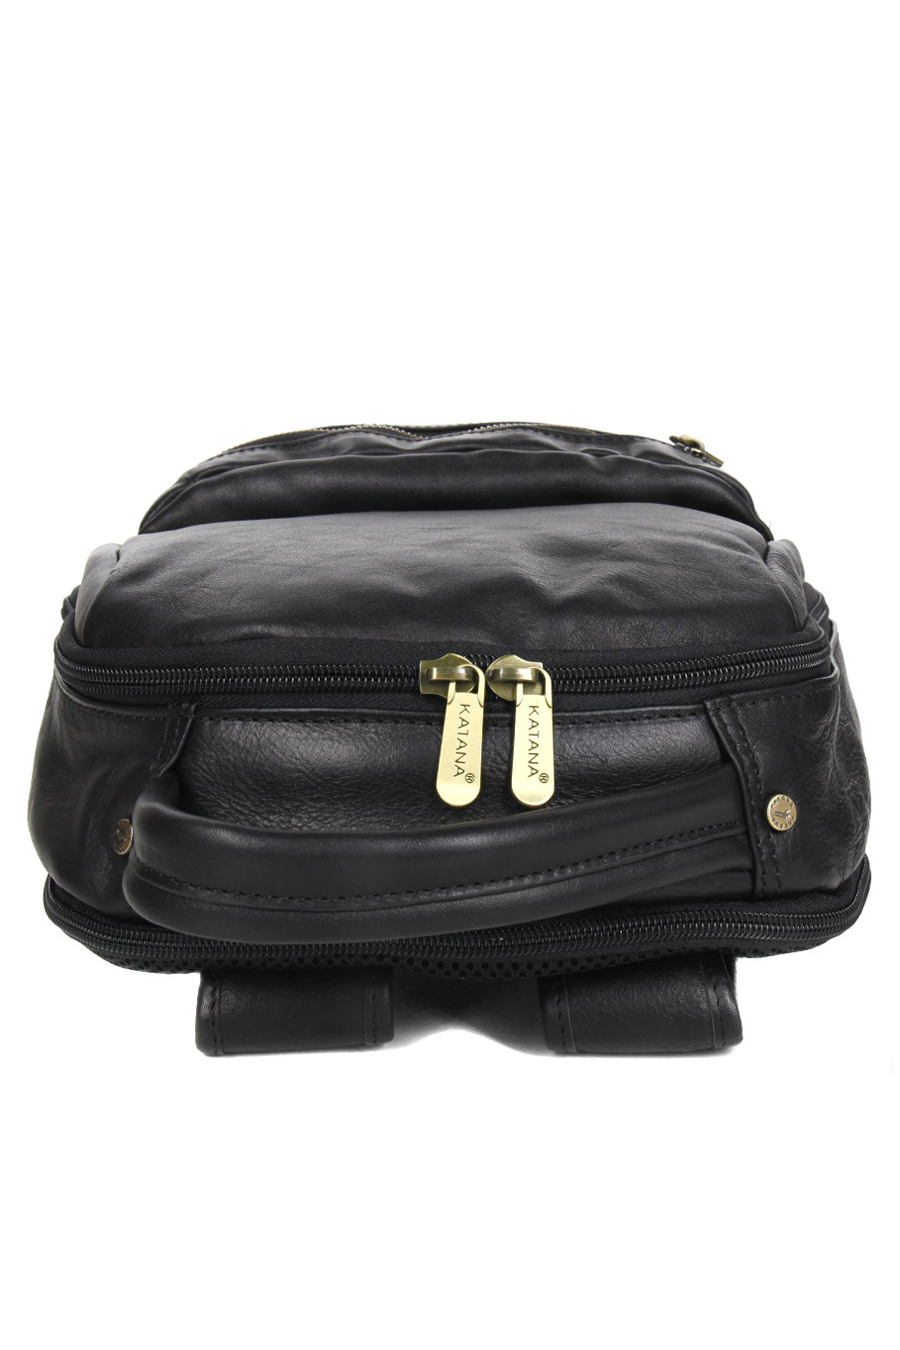 Backpack KATANA 31142-01